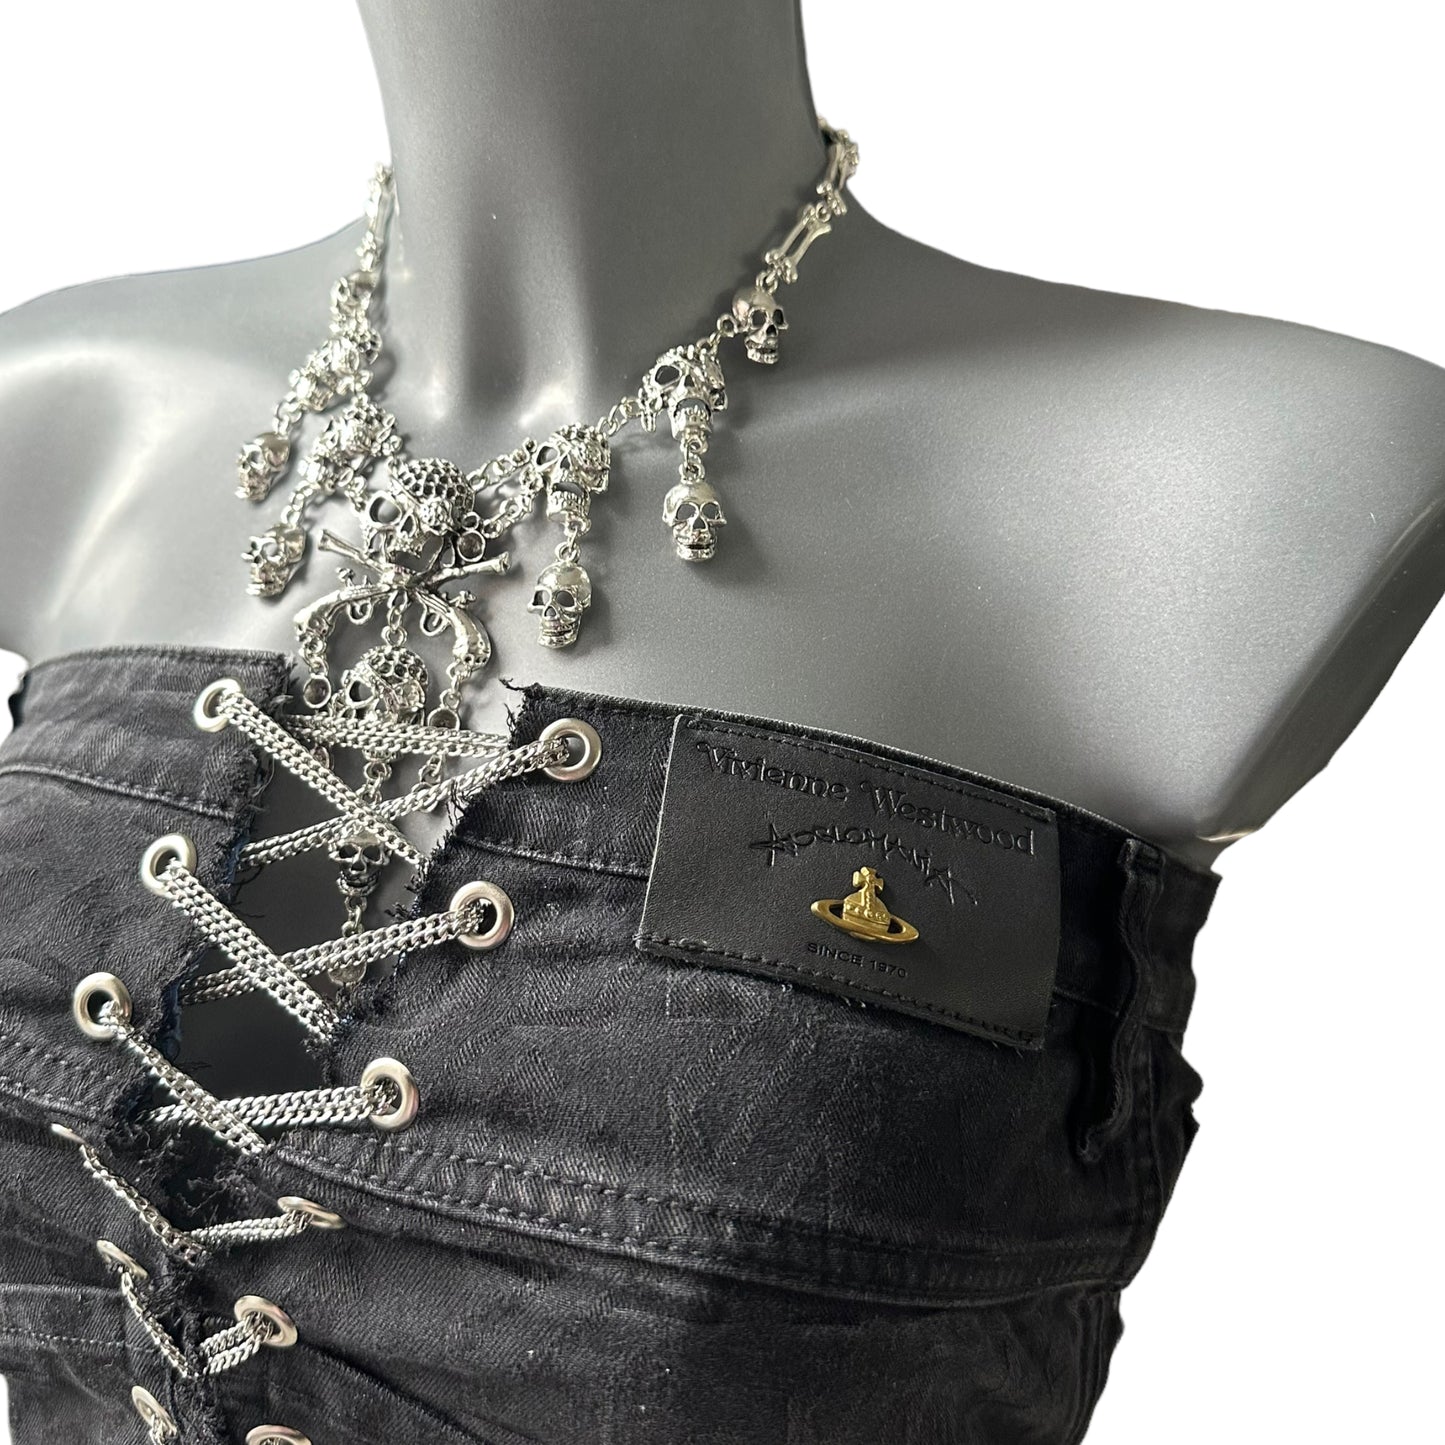 Authentic Vivienne Westwood Jeans Reworked Black Denim Corset Top 8 10 12